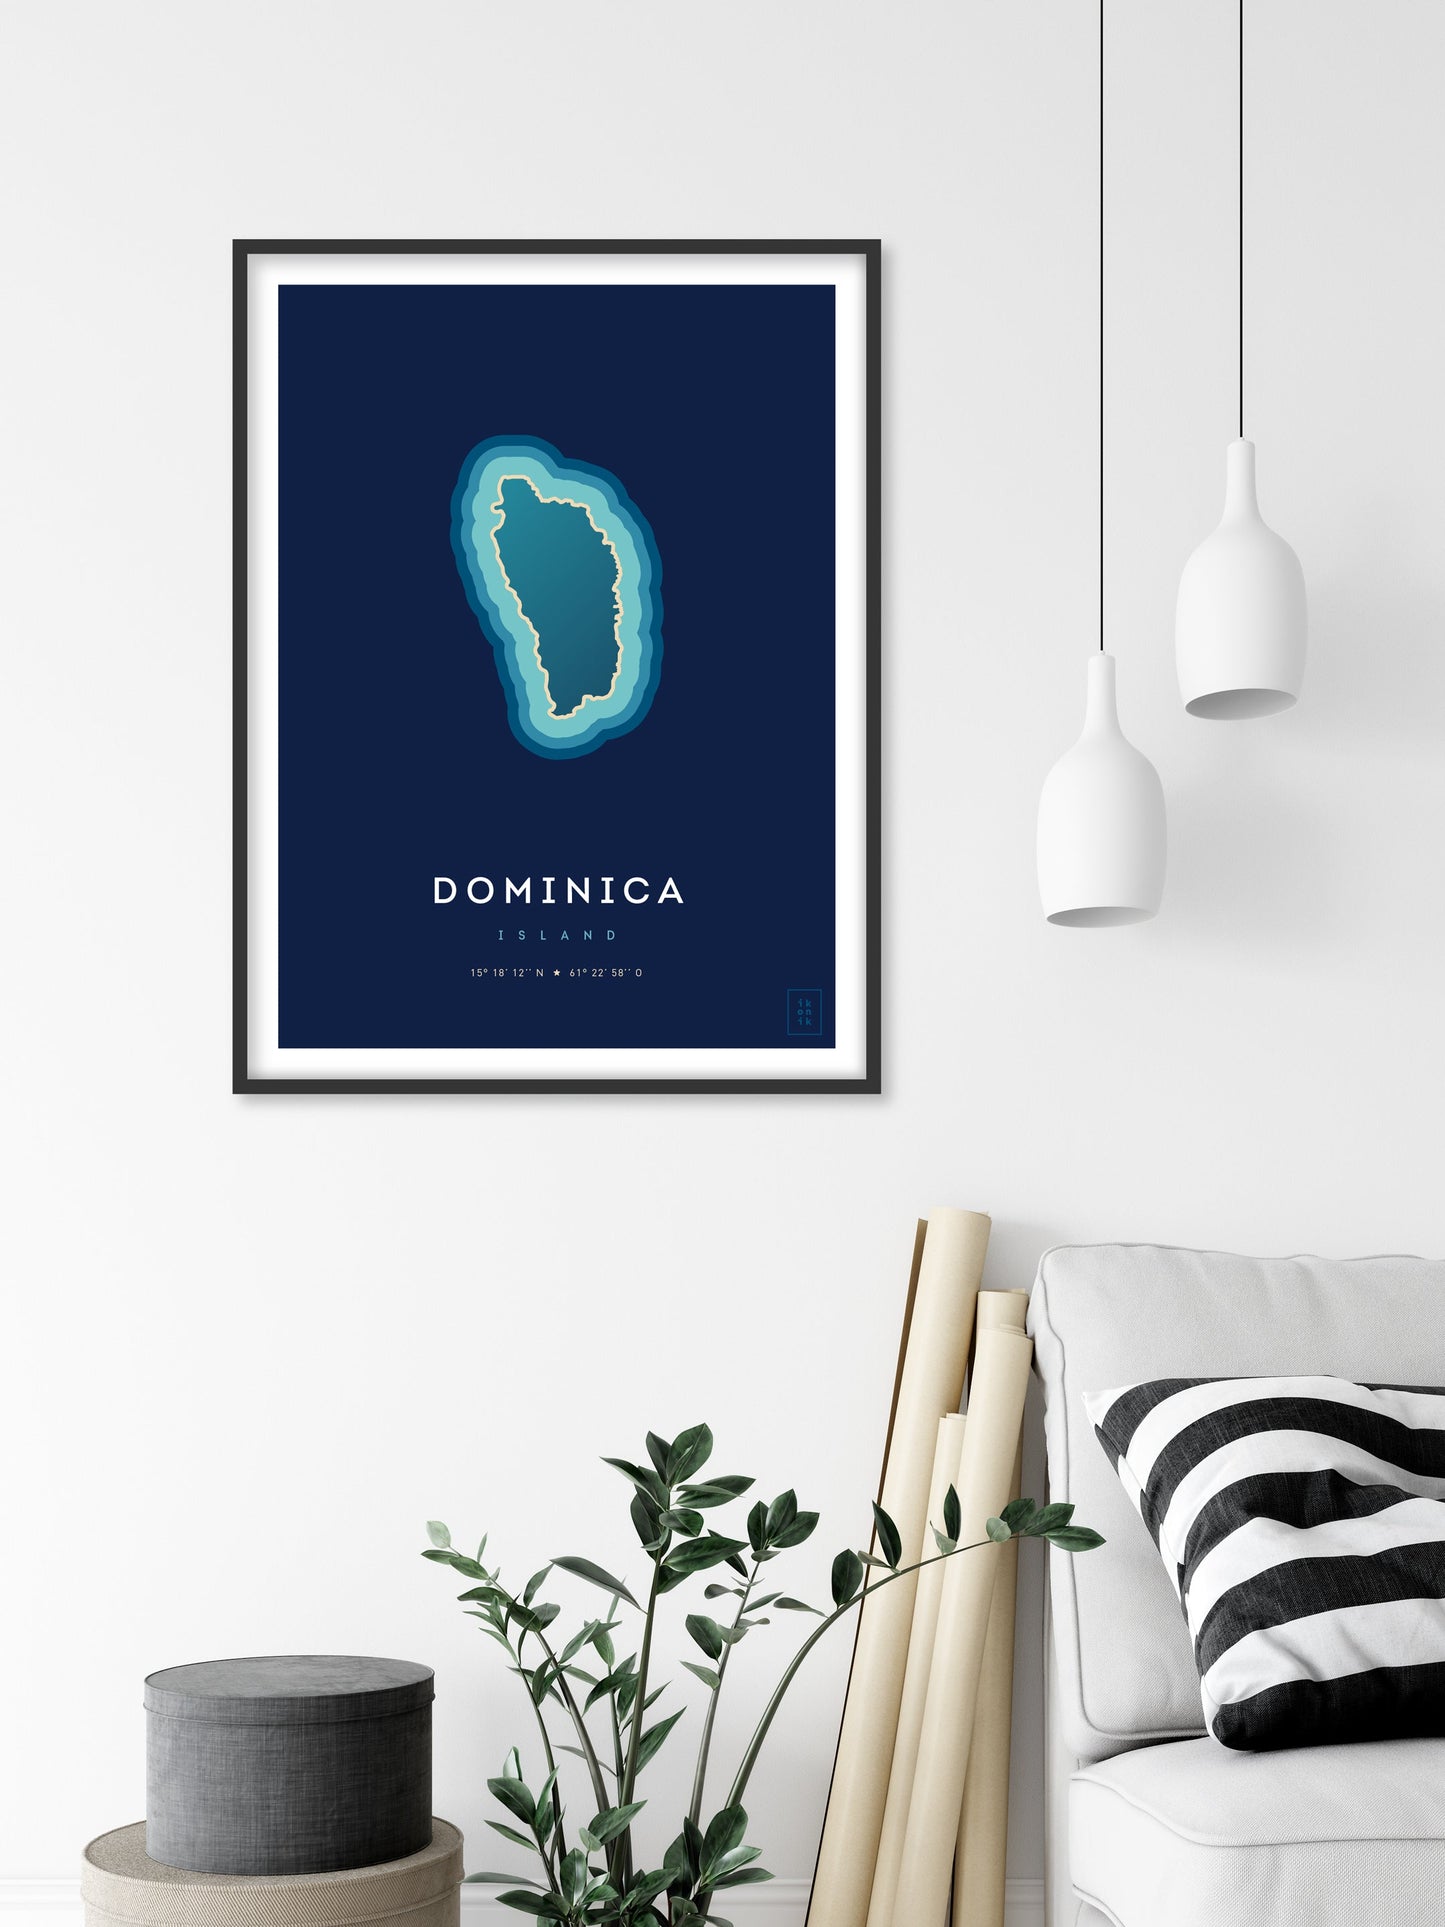 Dominica Island Poster